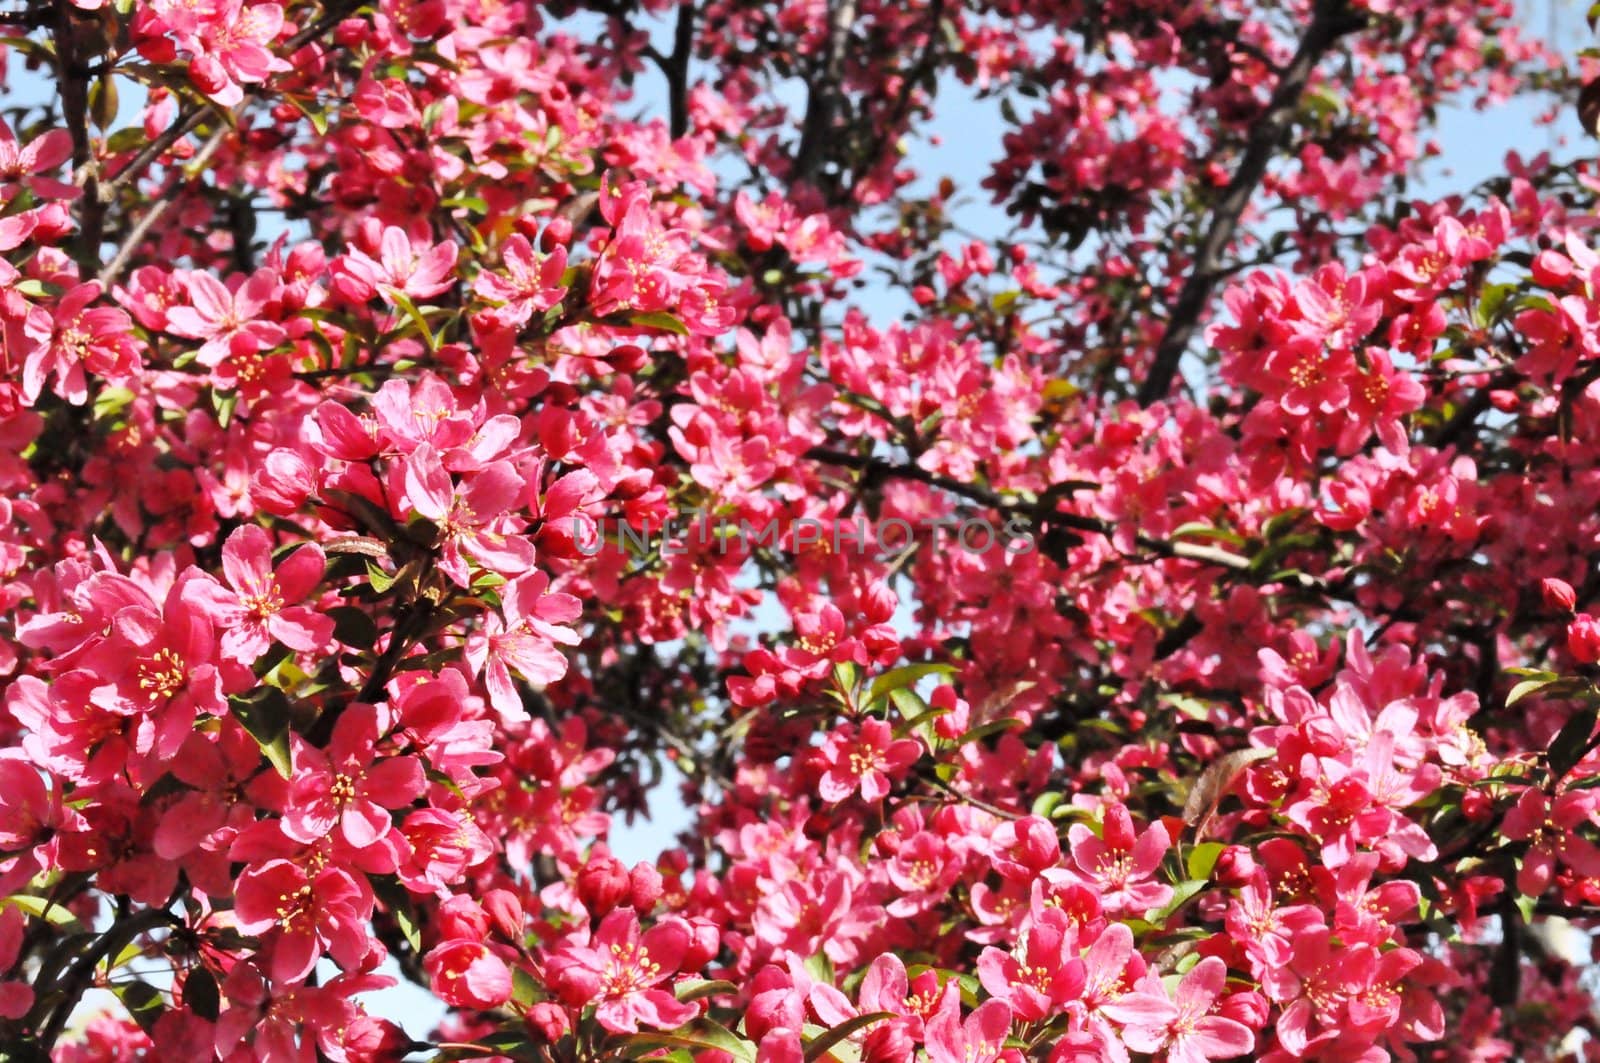 Pink flowers on tree by RefocusPhoto